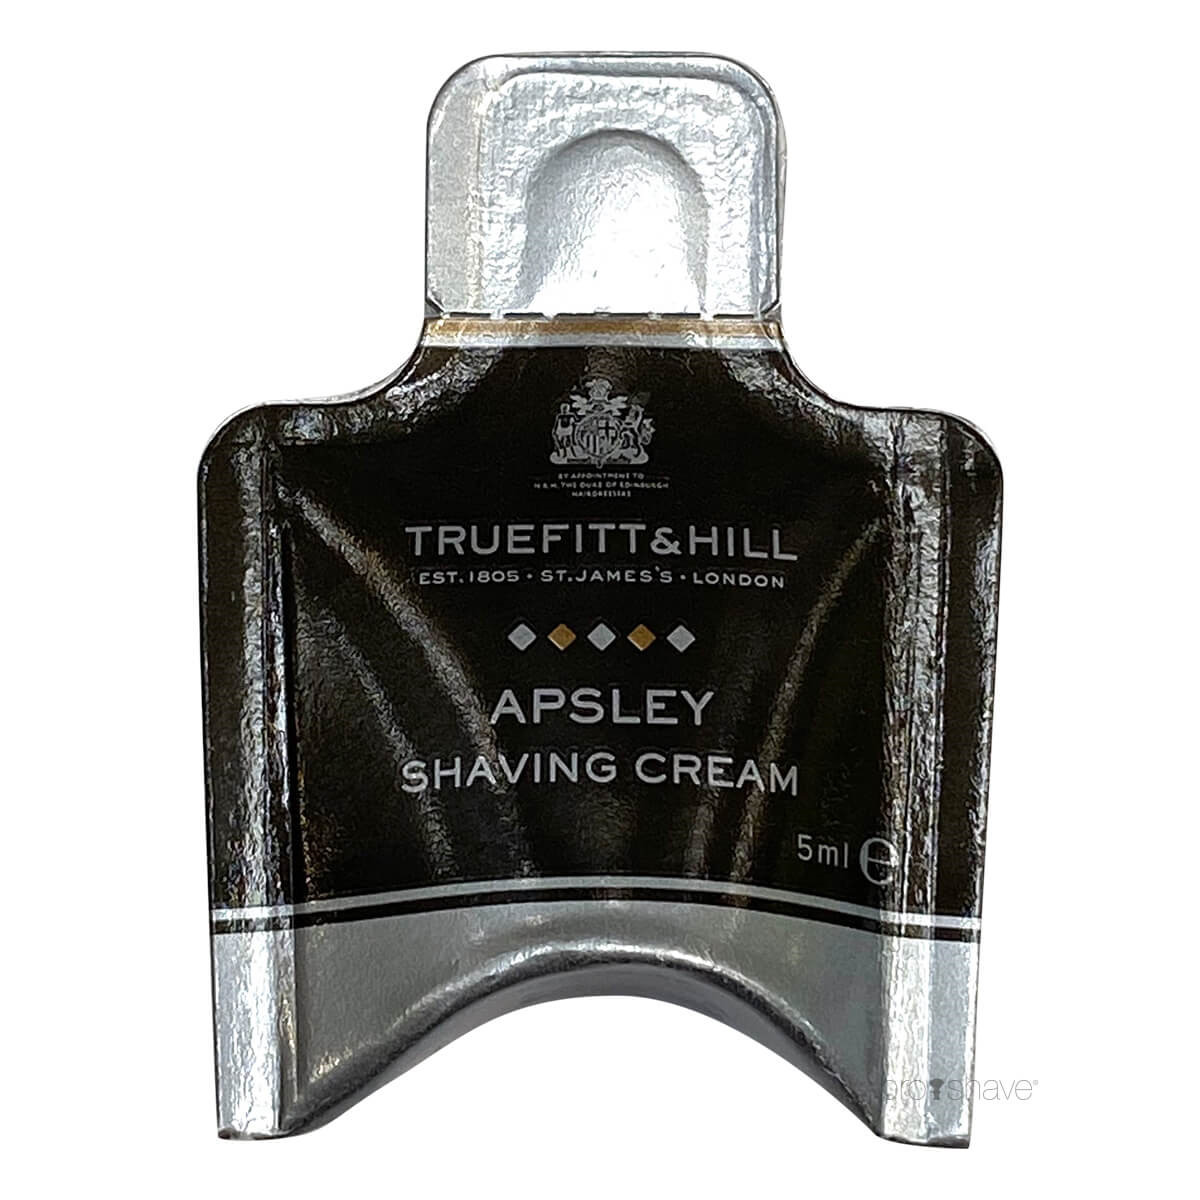 Billede af Truefitt & Hill Apsley Shaving Cream Sample Pack, 5 ml.